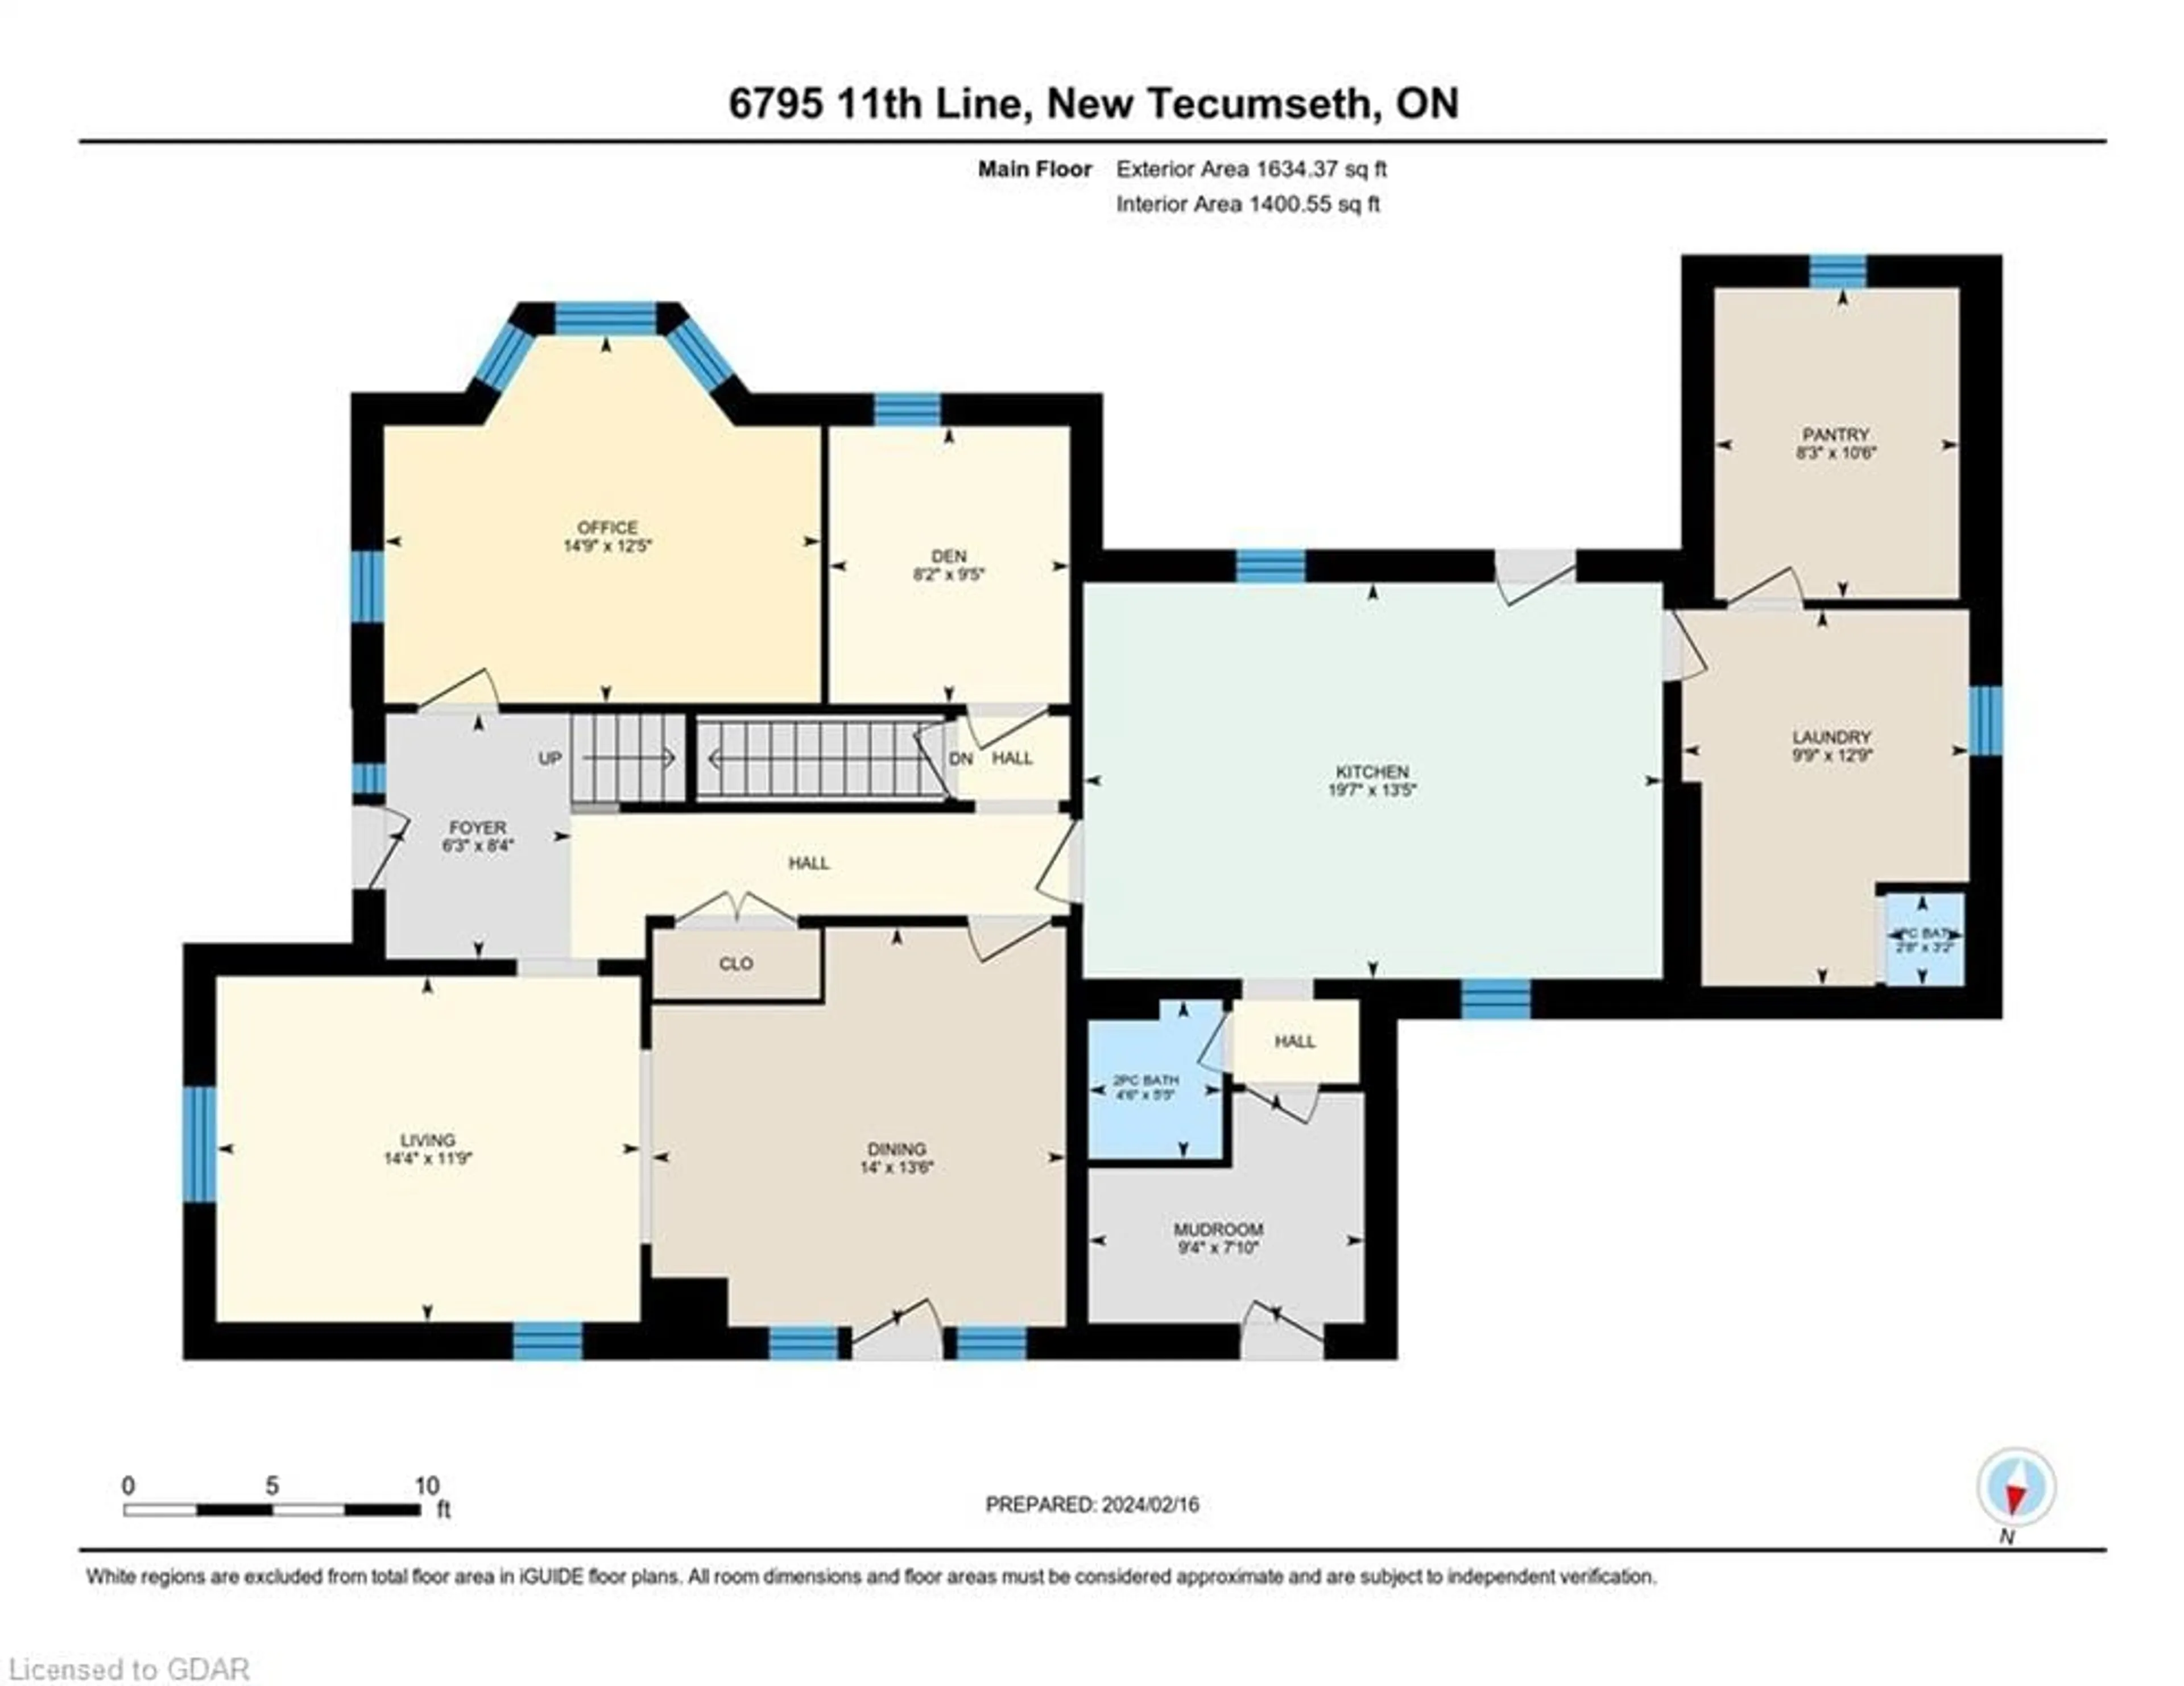 Floor plan for 6795 11th Line, Alliston Ontario L9R 1V4